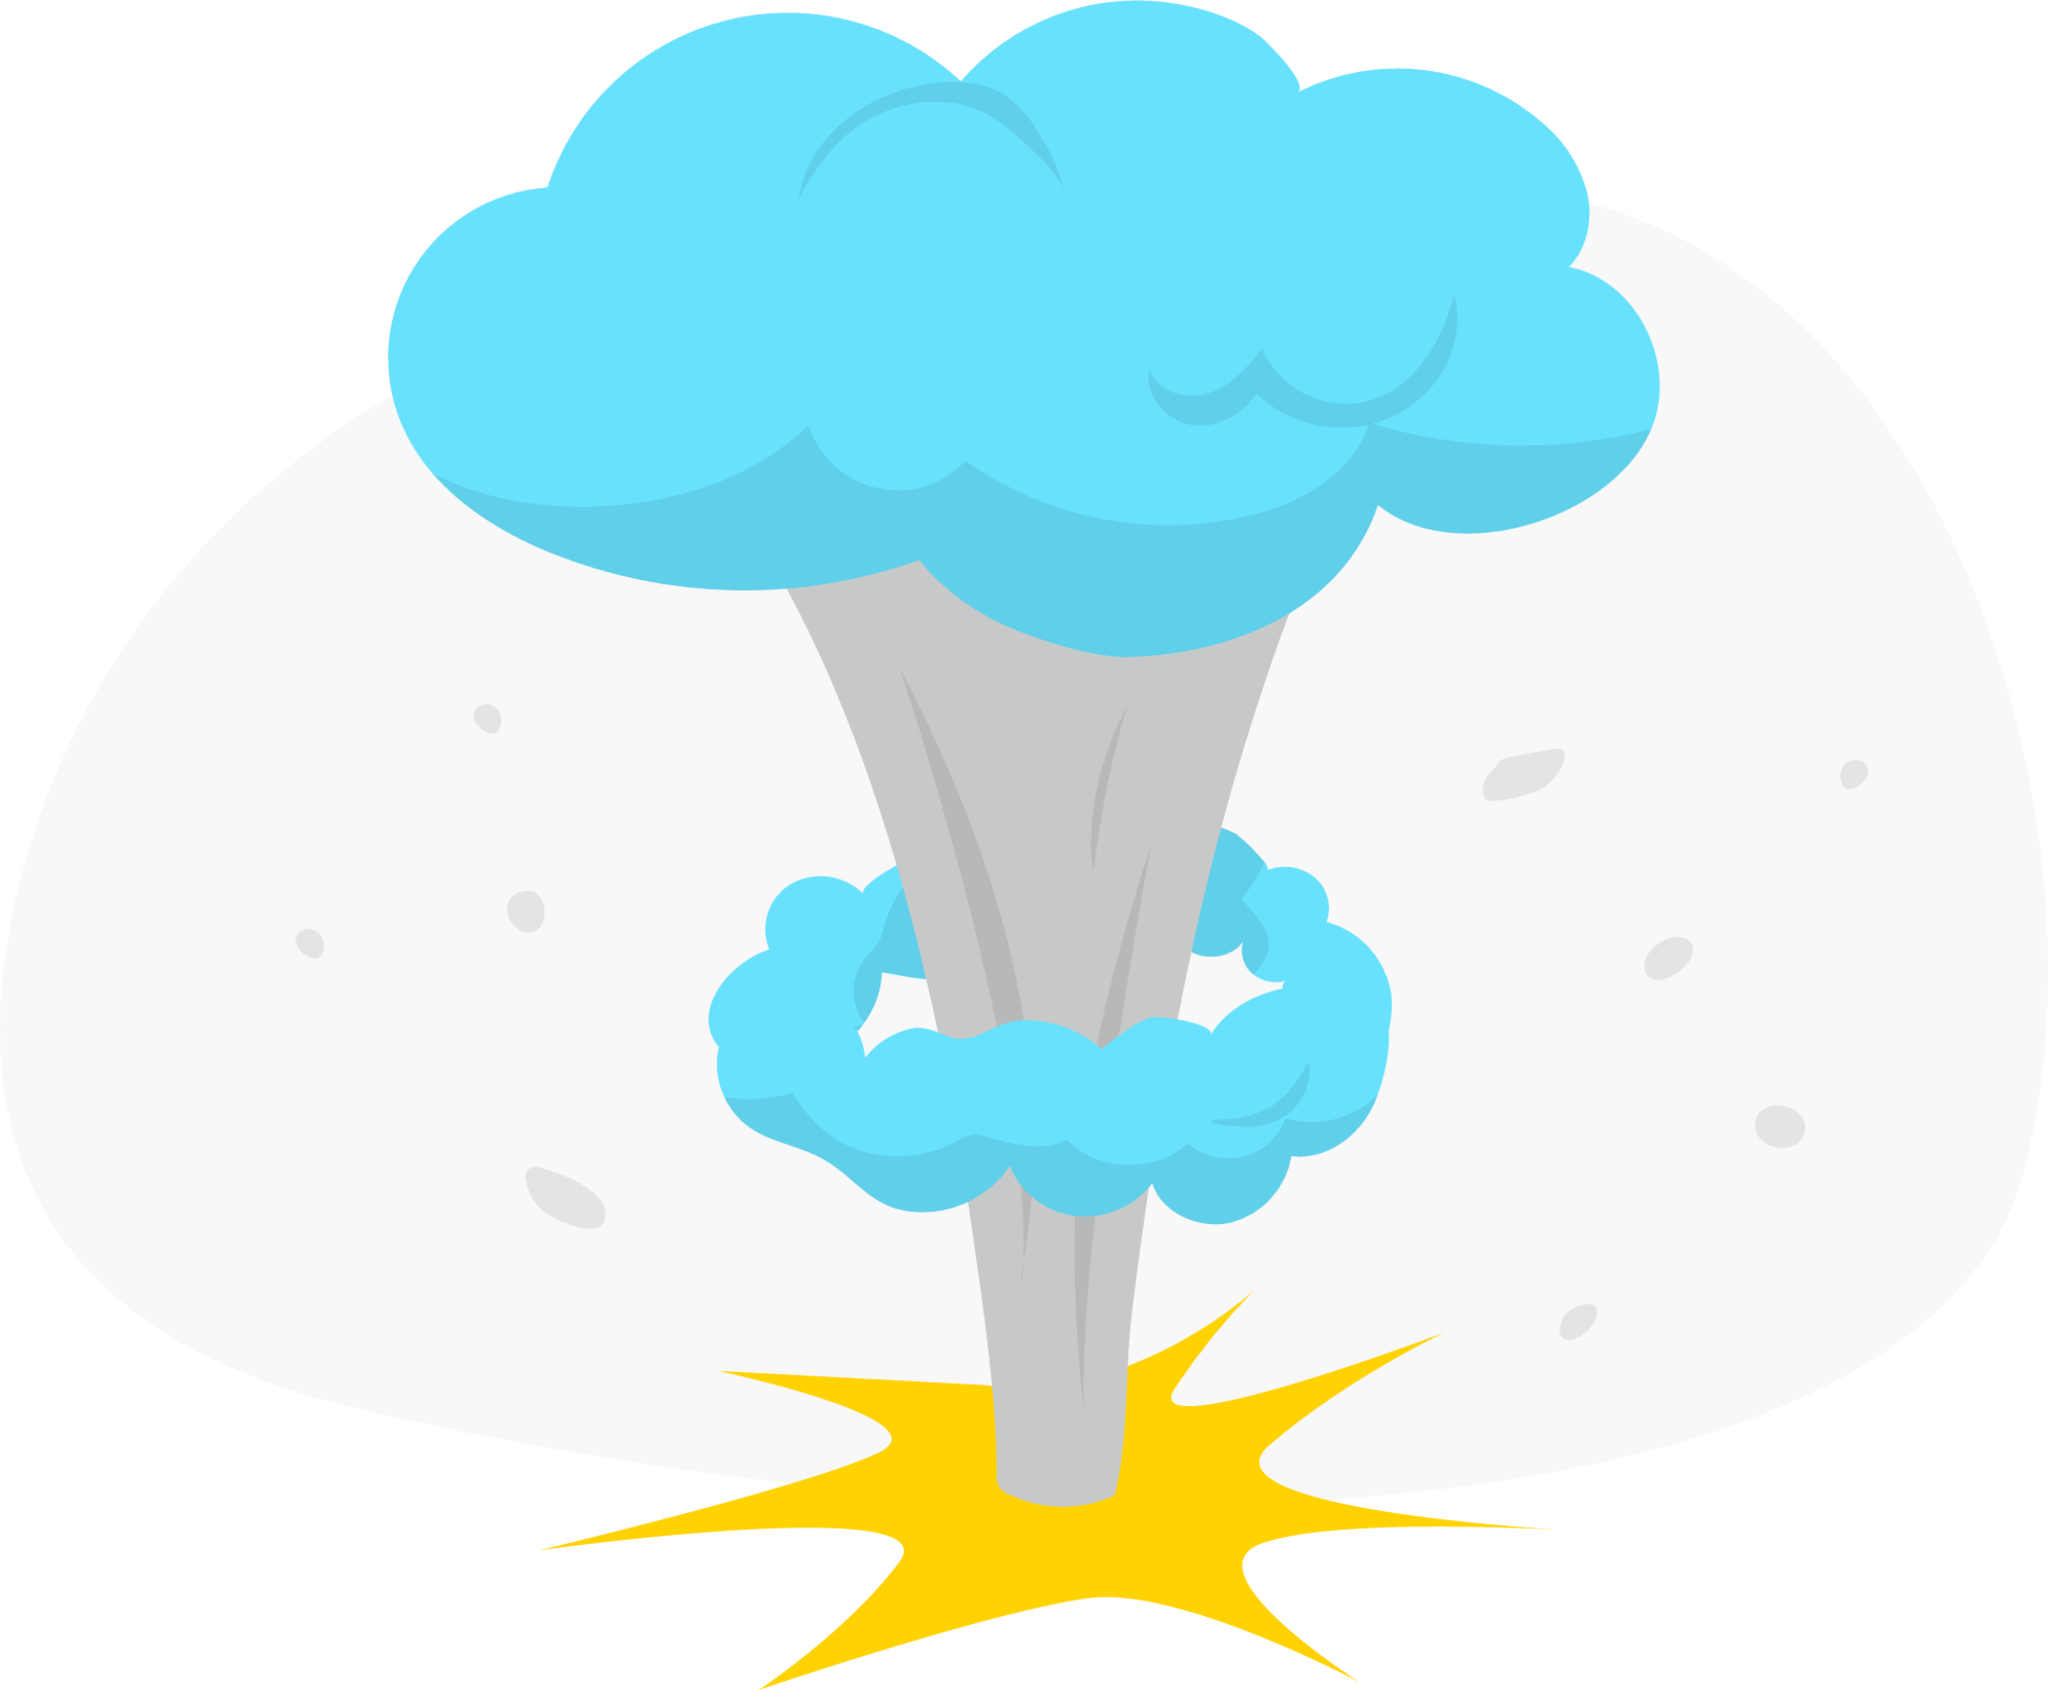 Explosion illustration